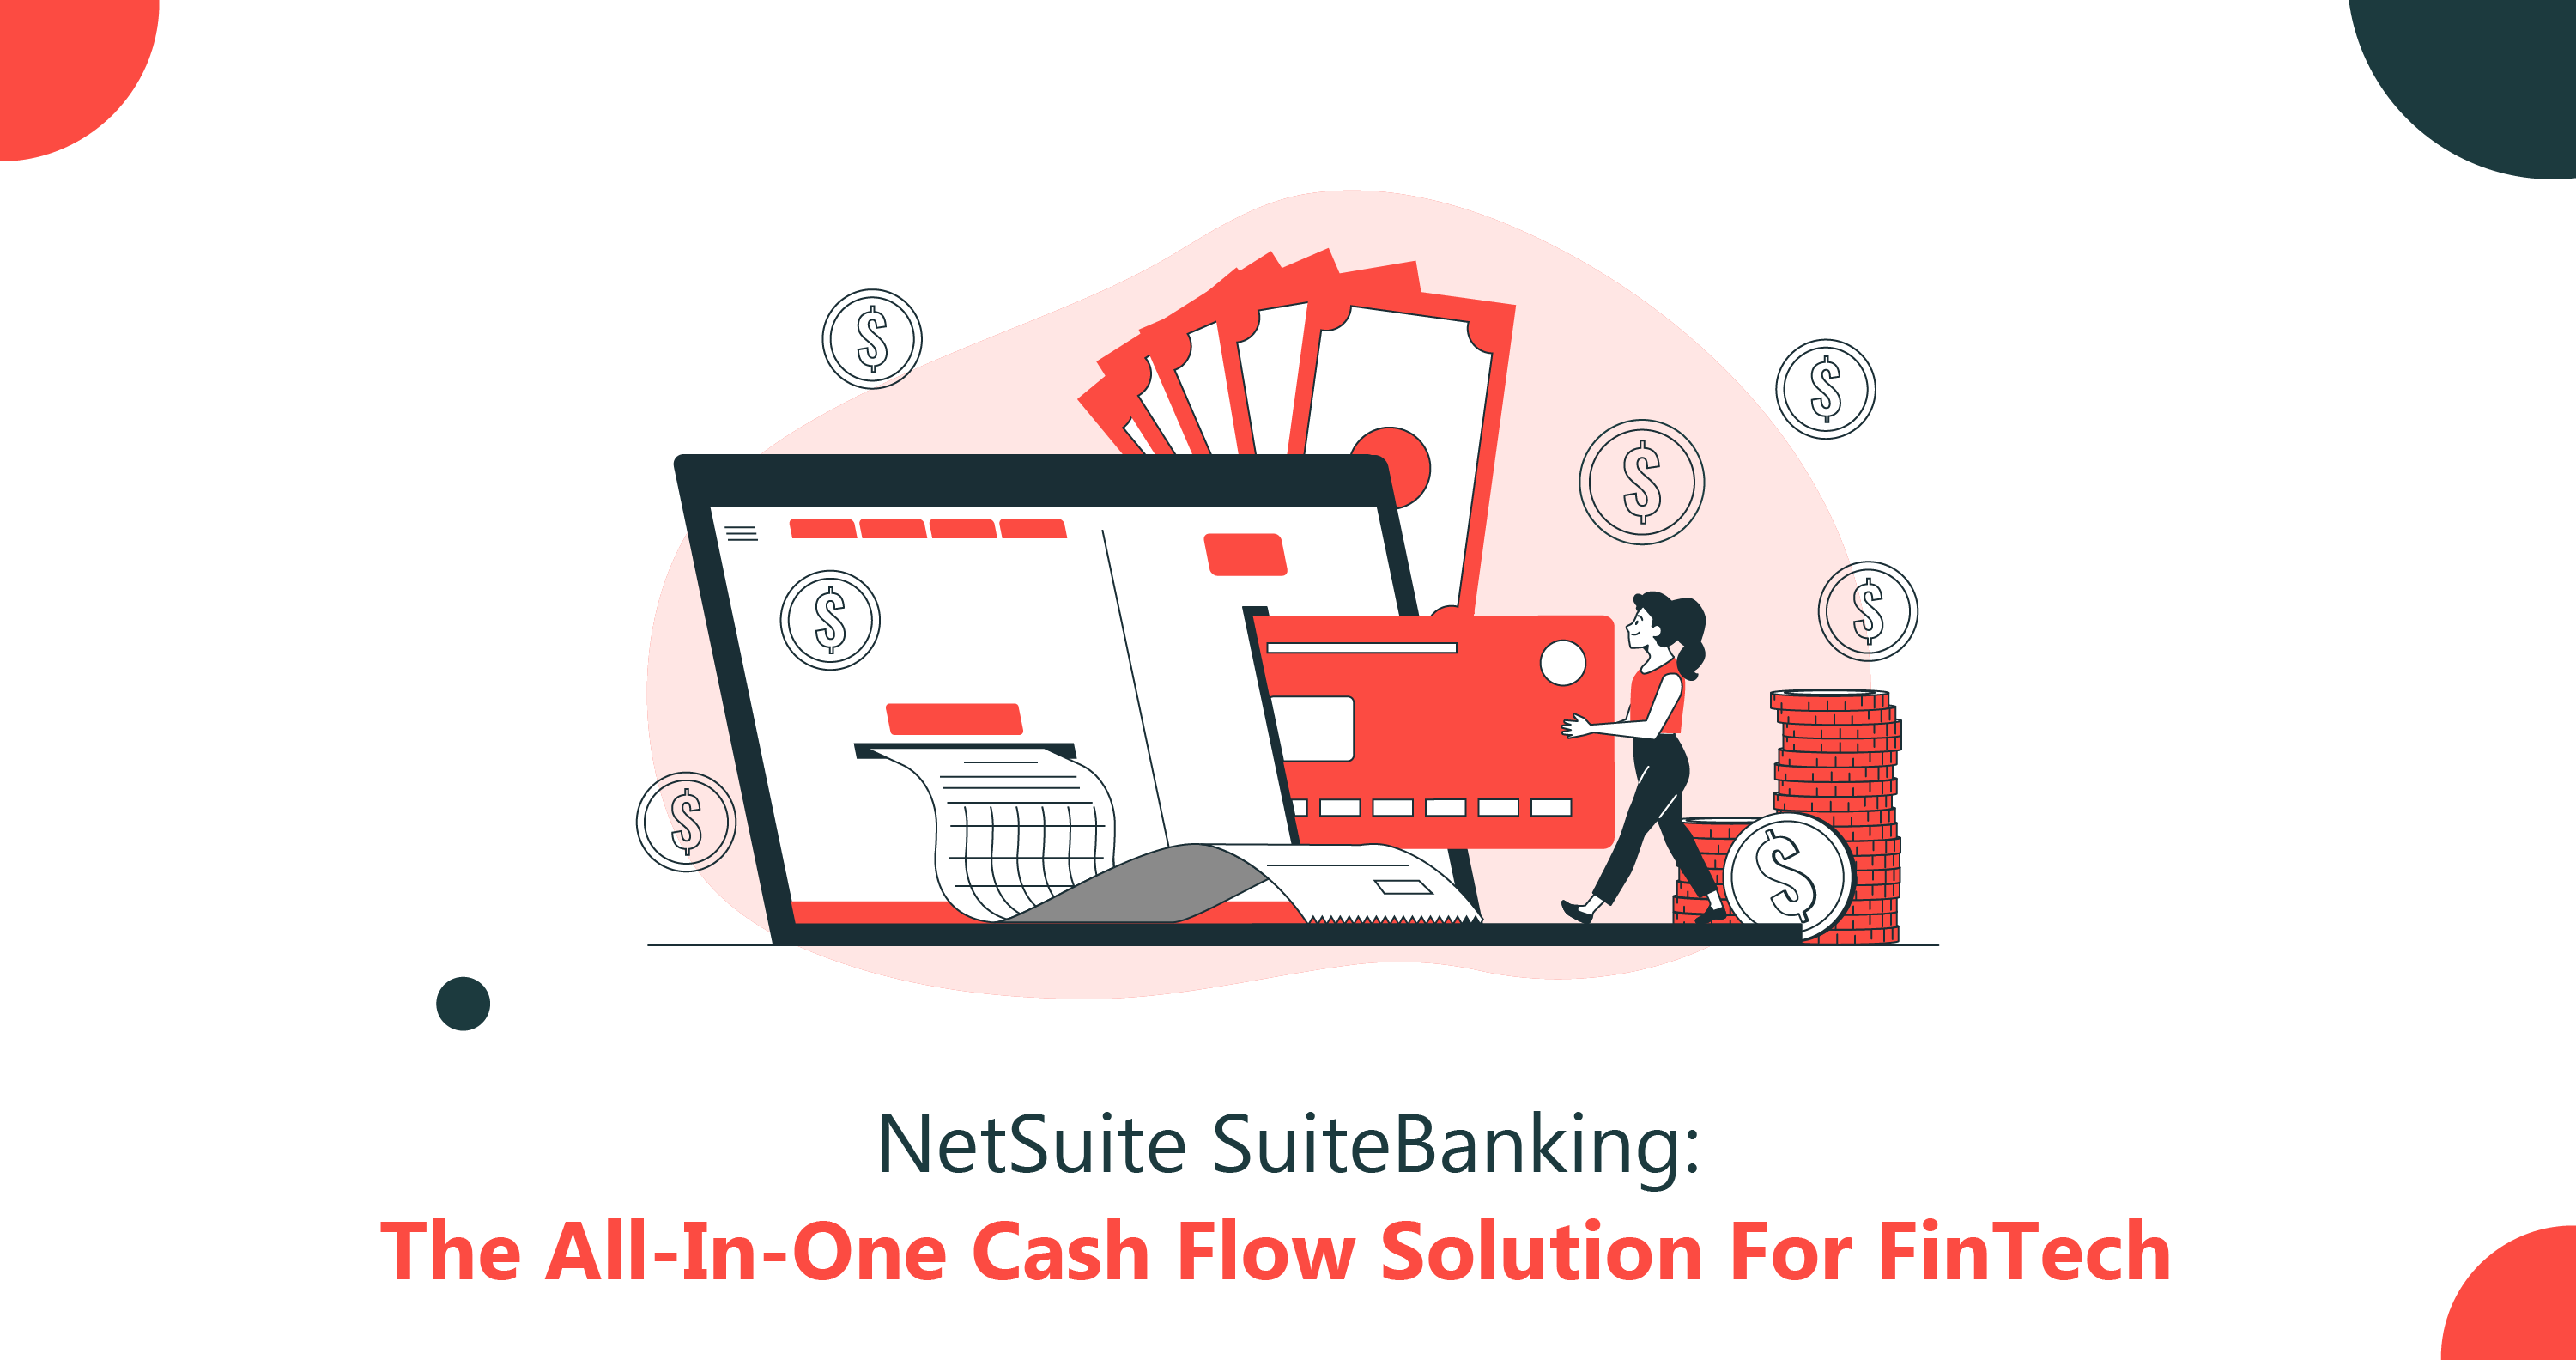 NetSuite SuiteBanking